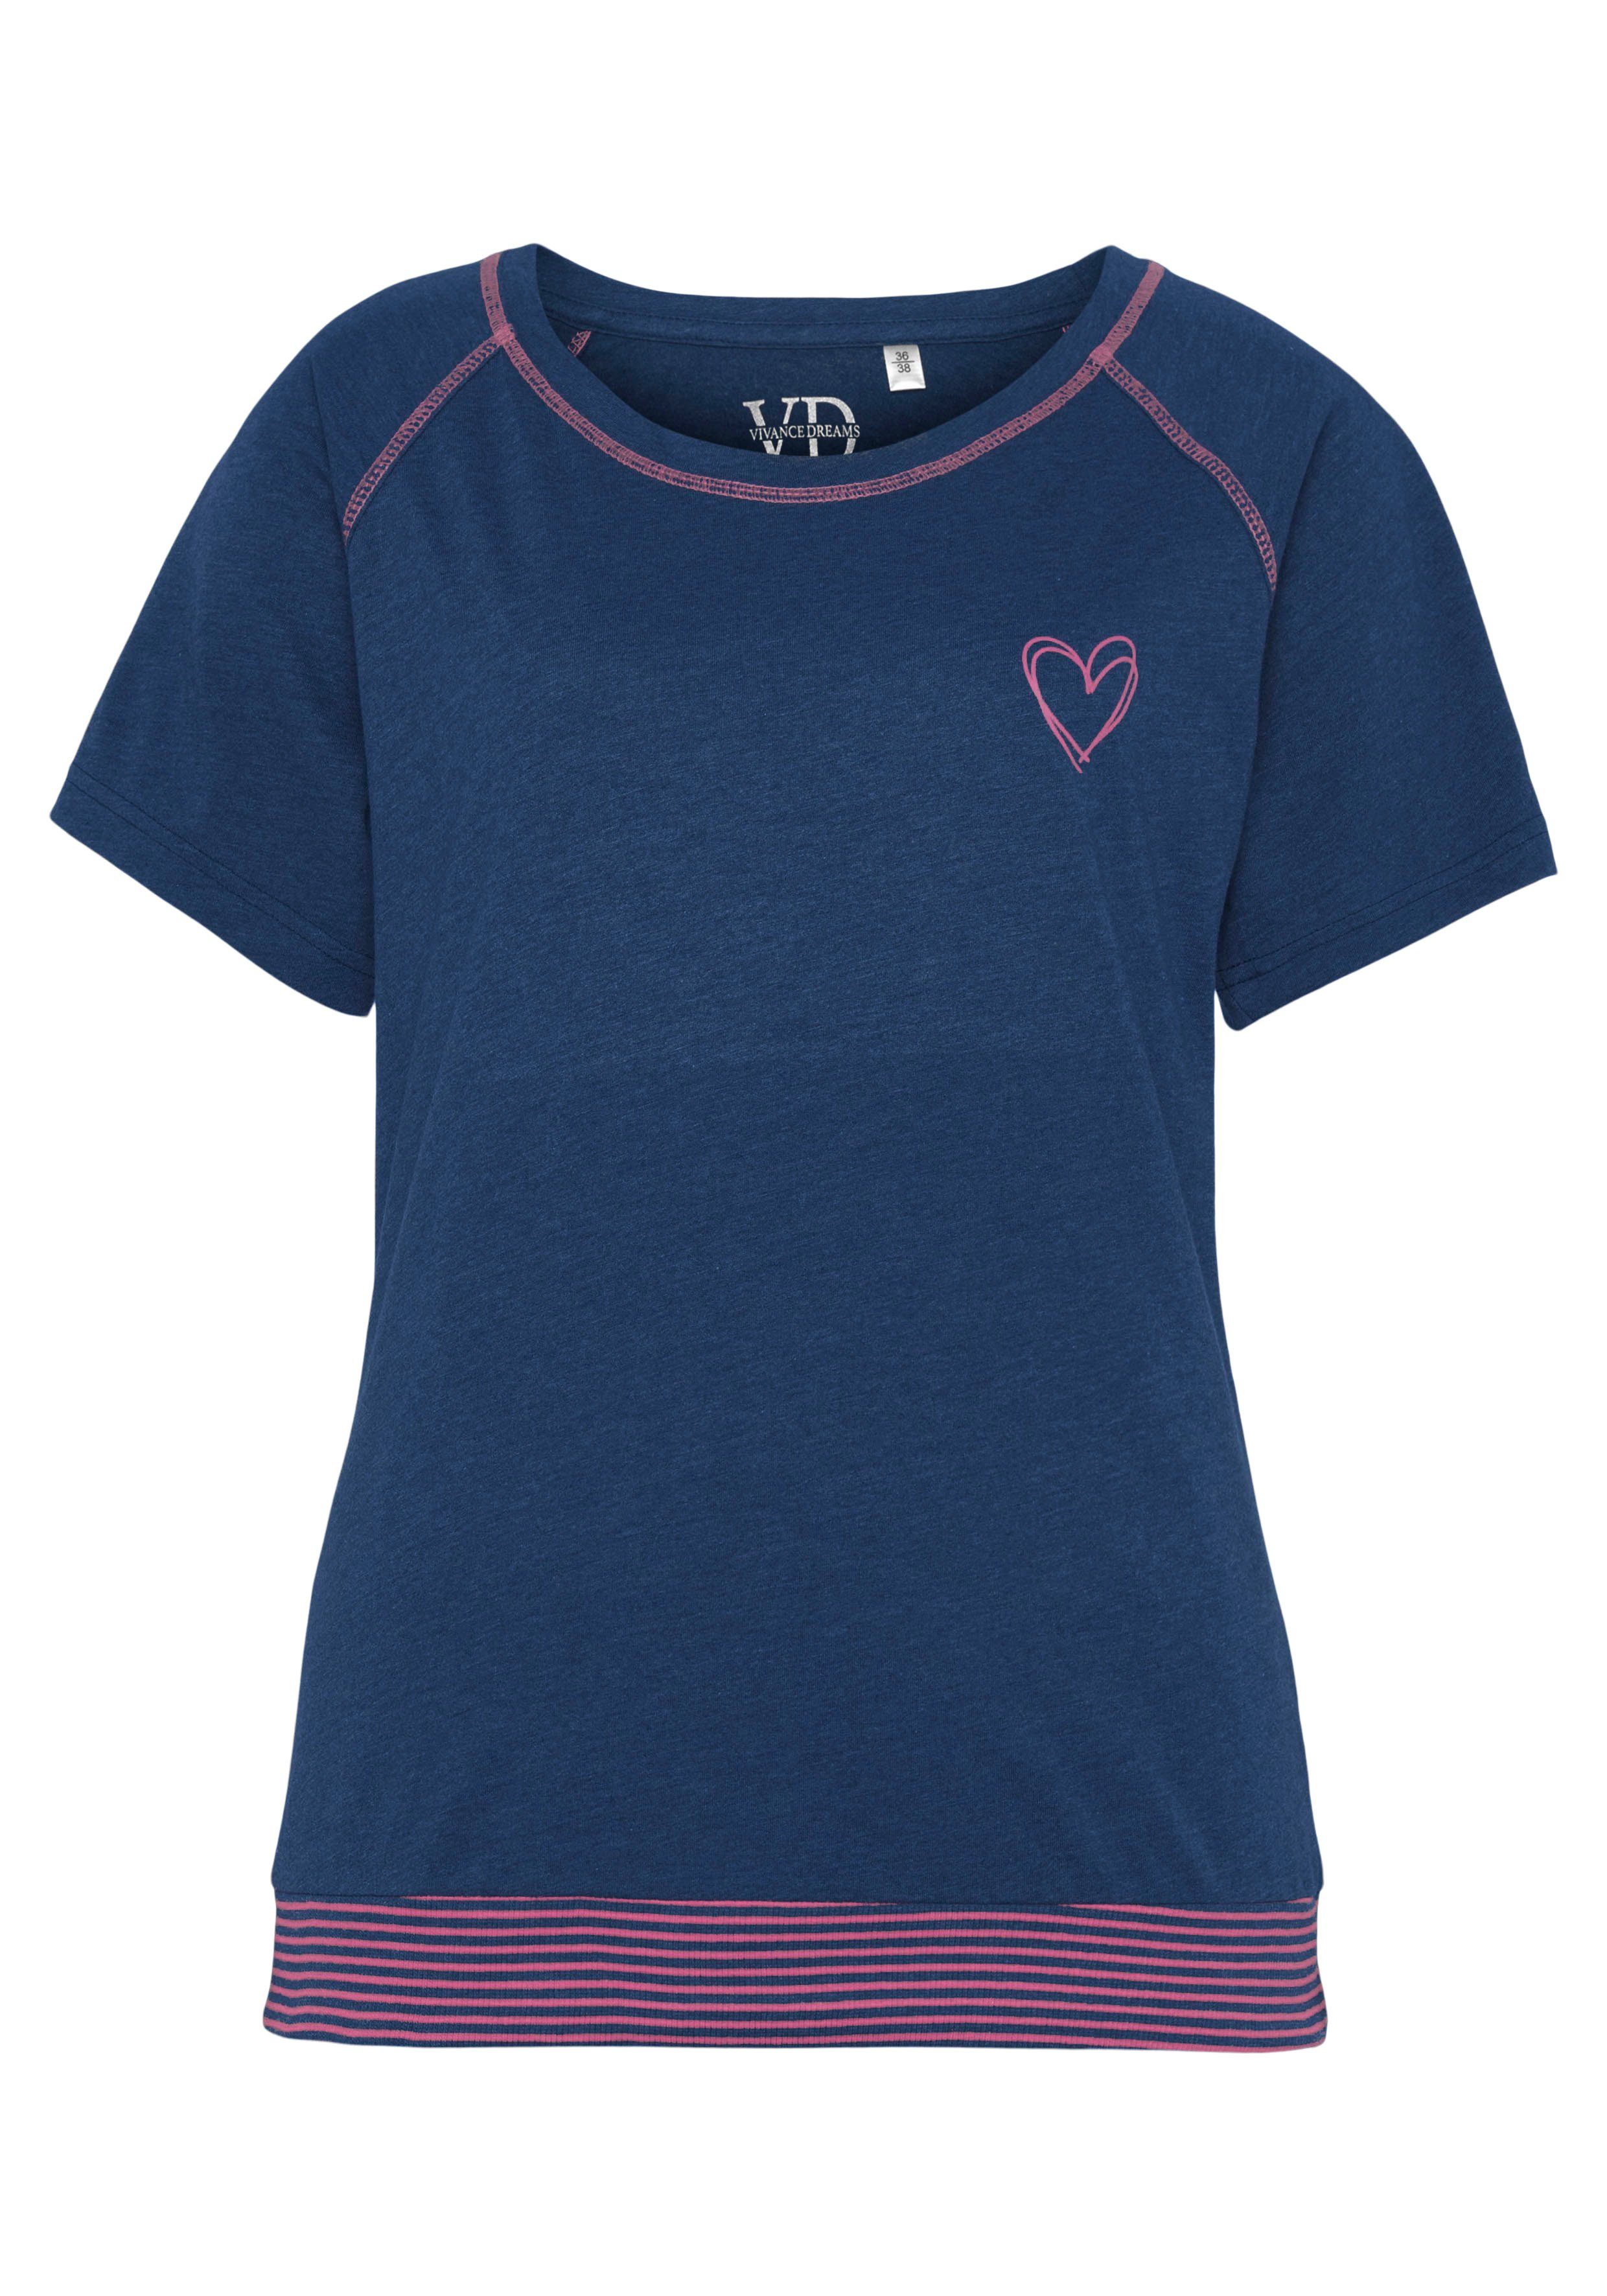 Vivance Dreams Shorty Neonfarben jeansblau/neon-pink mit (2 dekorativen tlg) in Flatlock-Nähten